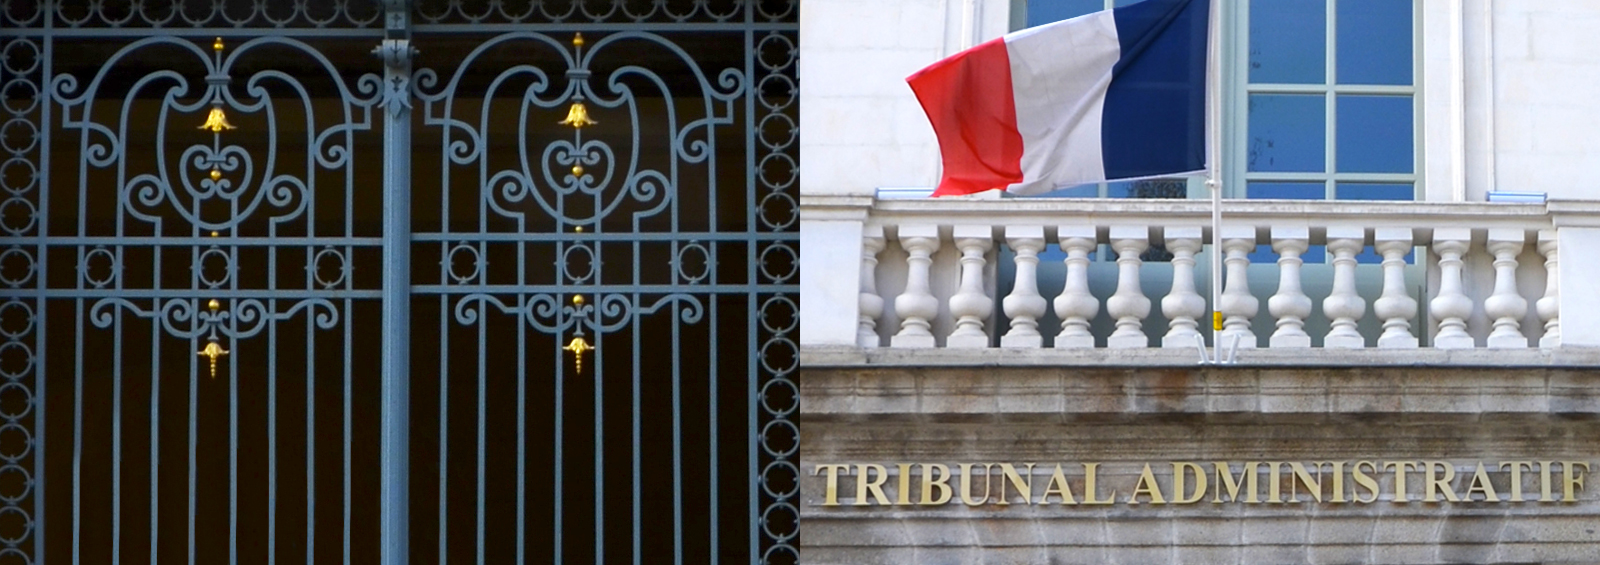 Tribunal Administratif de Rennes / Droit Immobilier / Droit des Contrats / Cabinet d'Avocats Bertrand Maillard / Avocats Rennes 